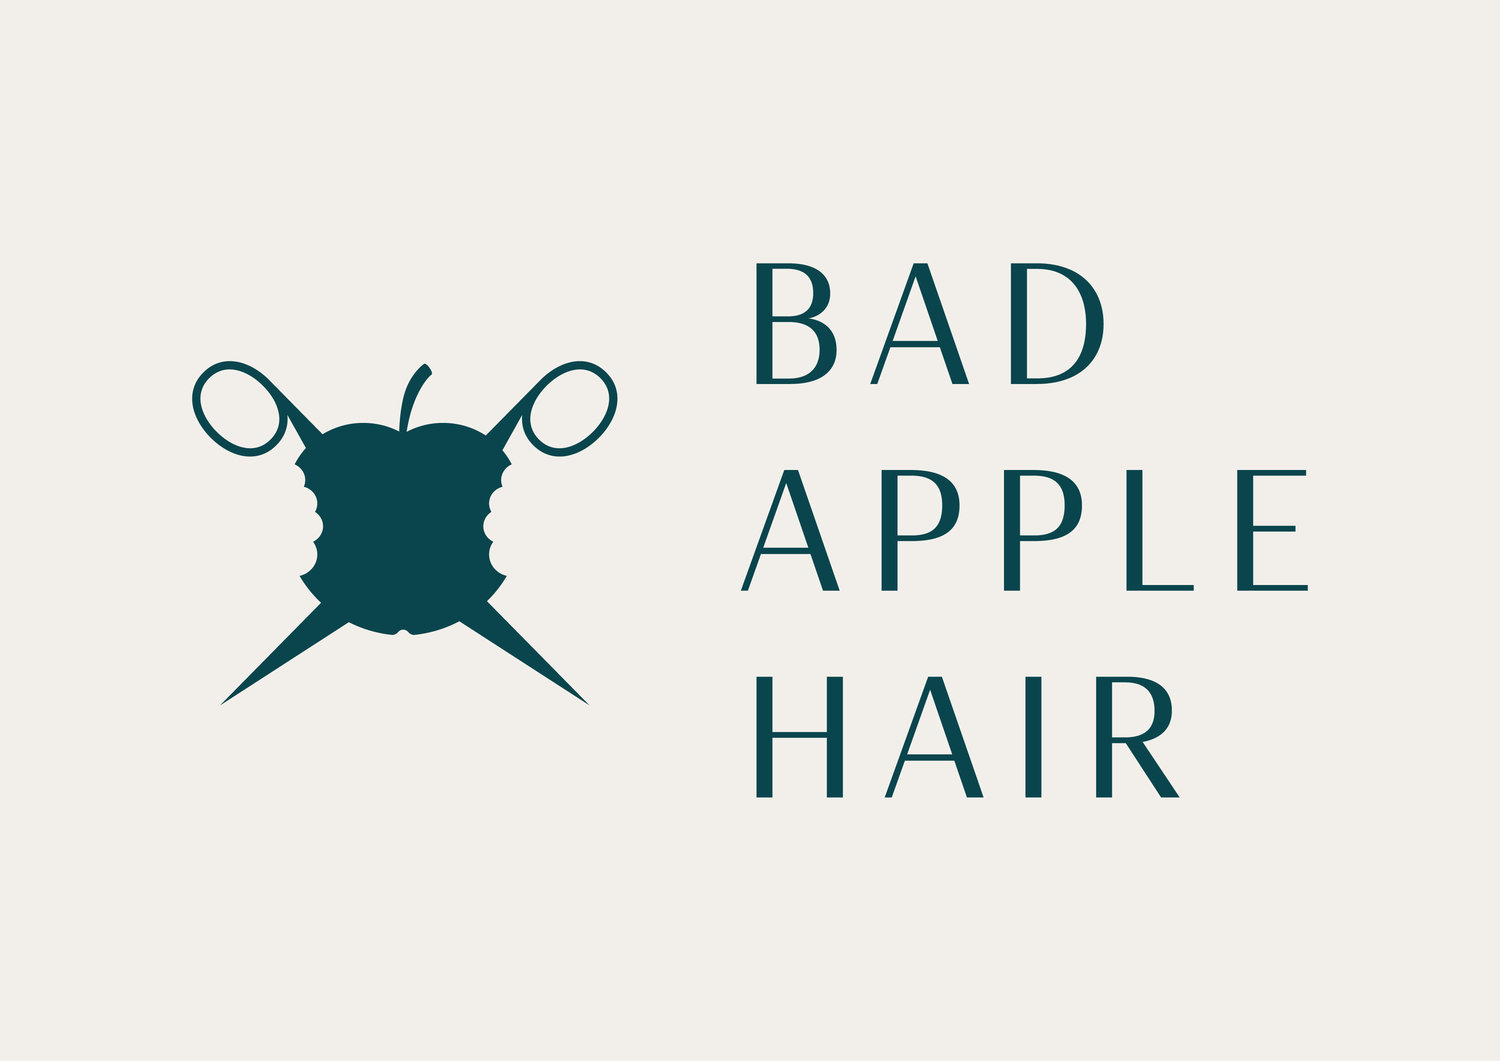 Award Winning Hair Salons Hairdressers In Birmingham Bad Apple